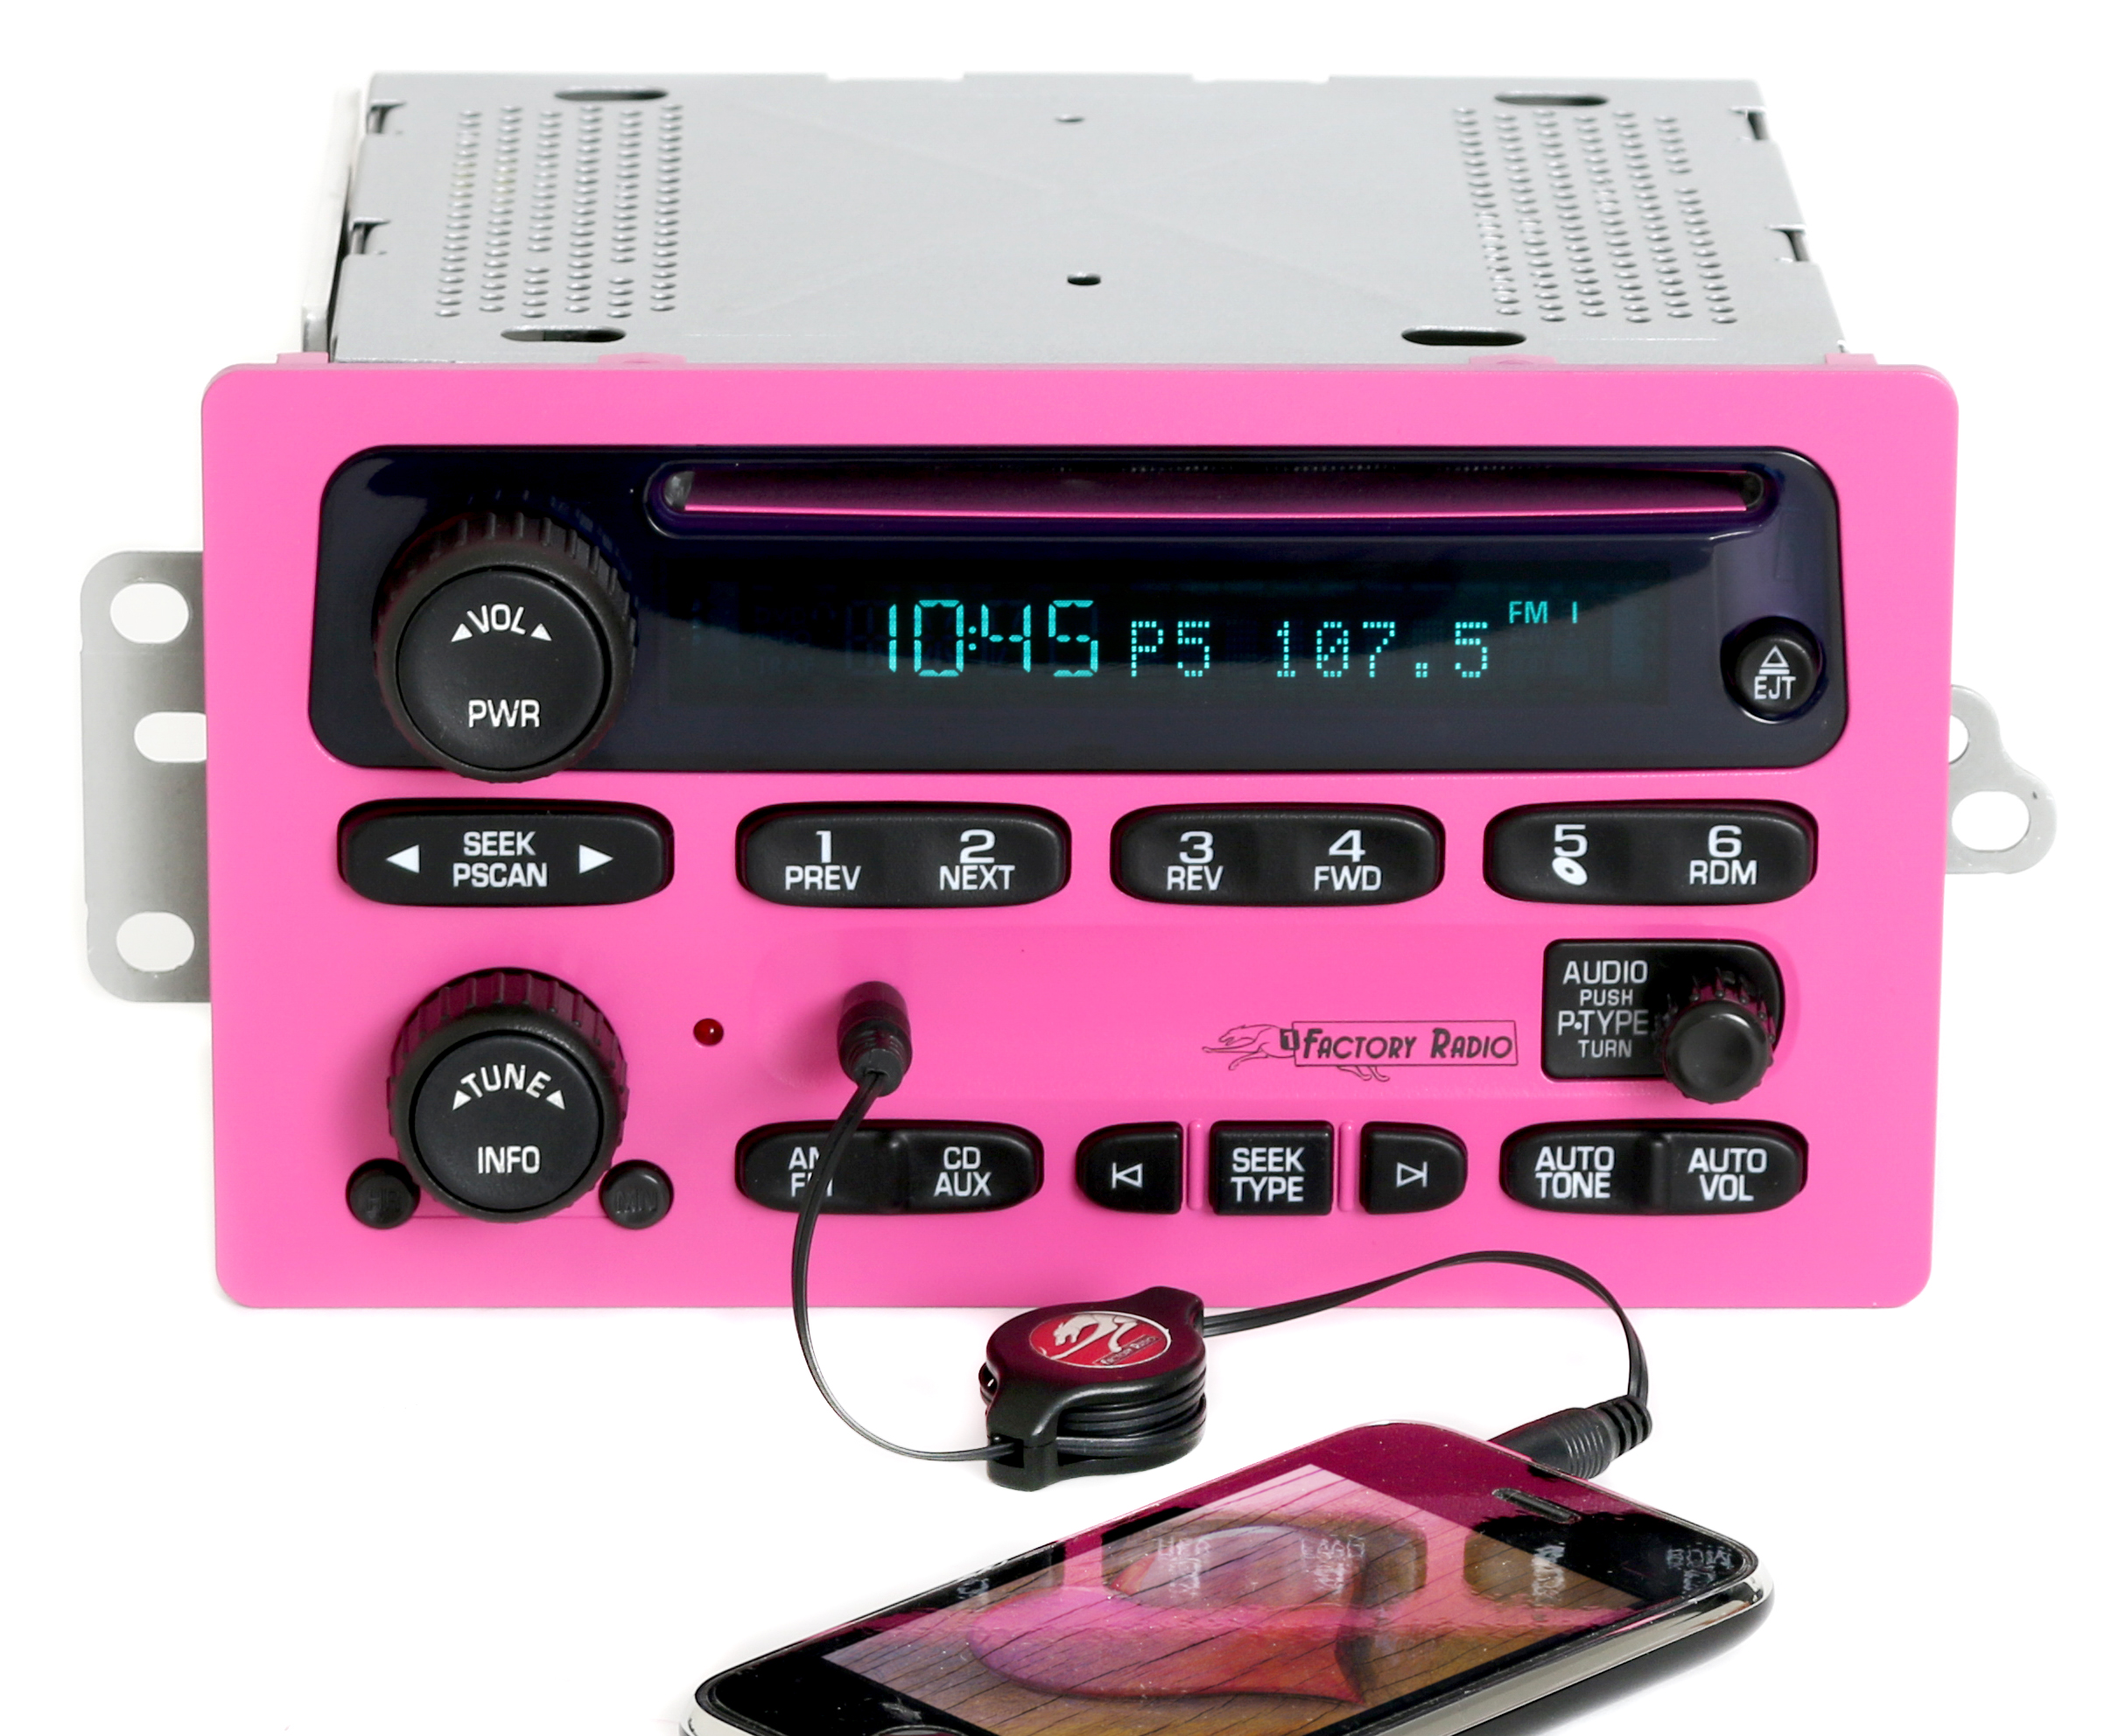 Restored Chevy 2005-09 GMC Truck Radio AM FM CD Player w Aux Input Pink Version 10359576 (Refurbished) - image 3 of 6